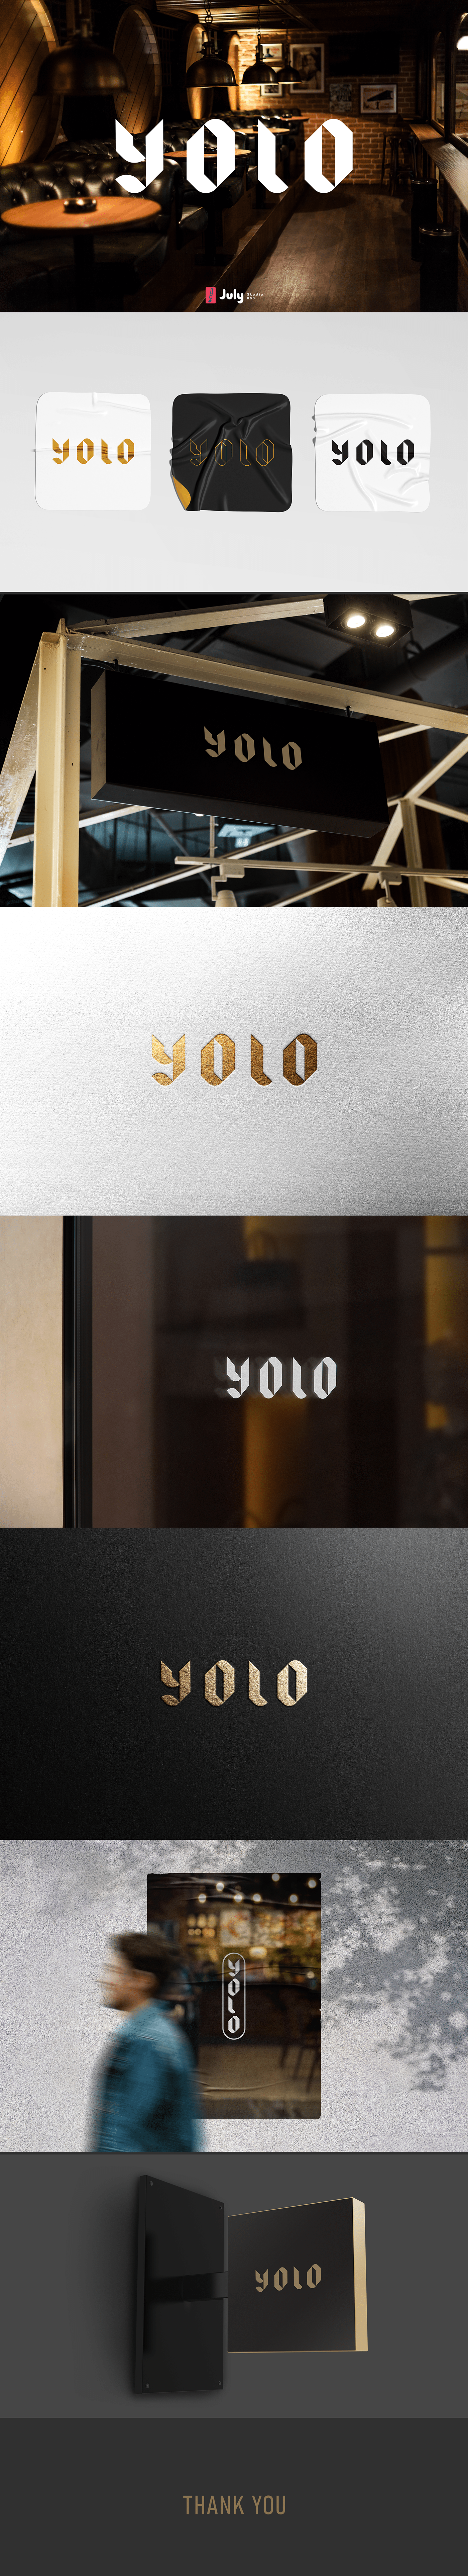 bar chill restaurant text typography   yolo